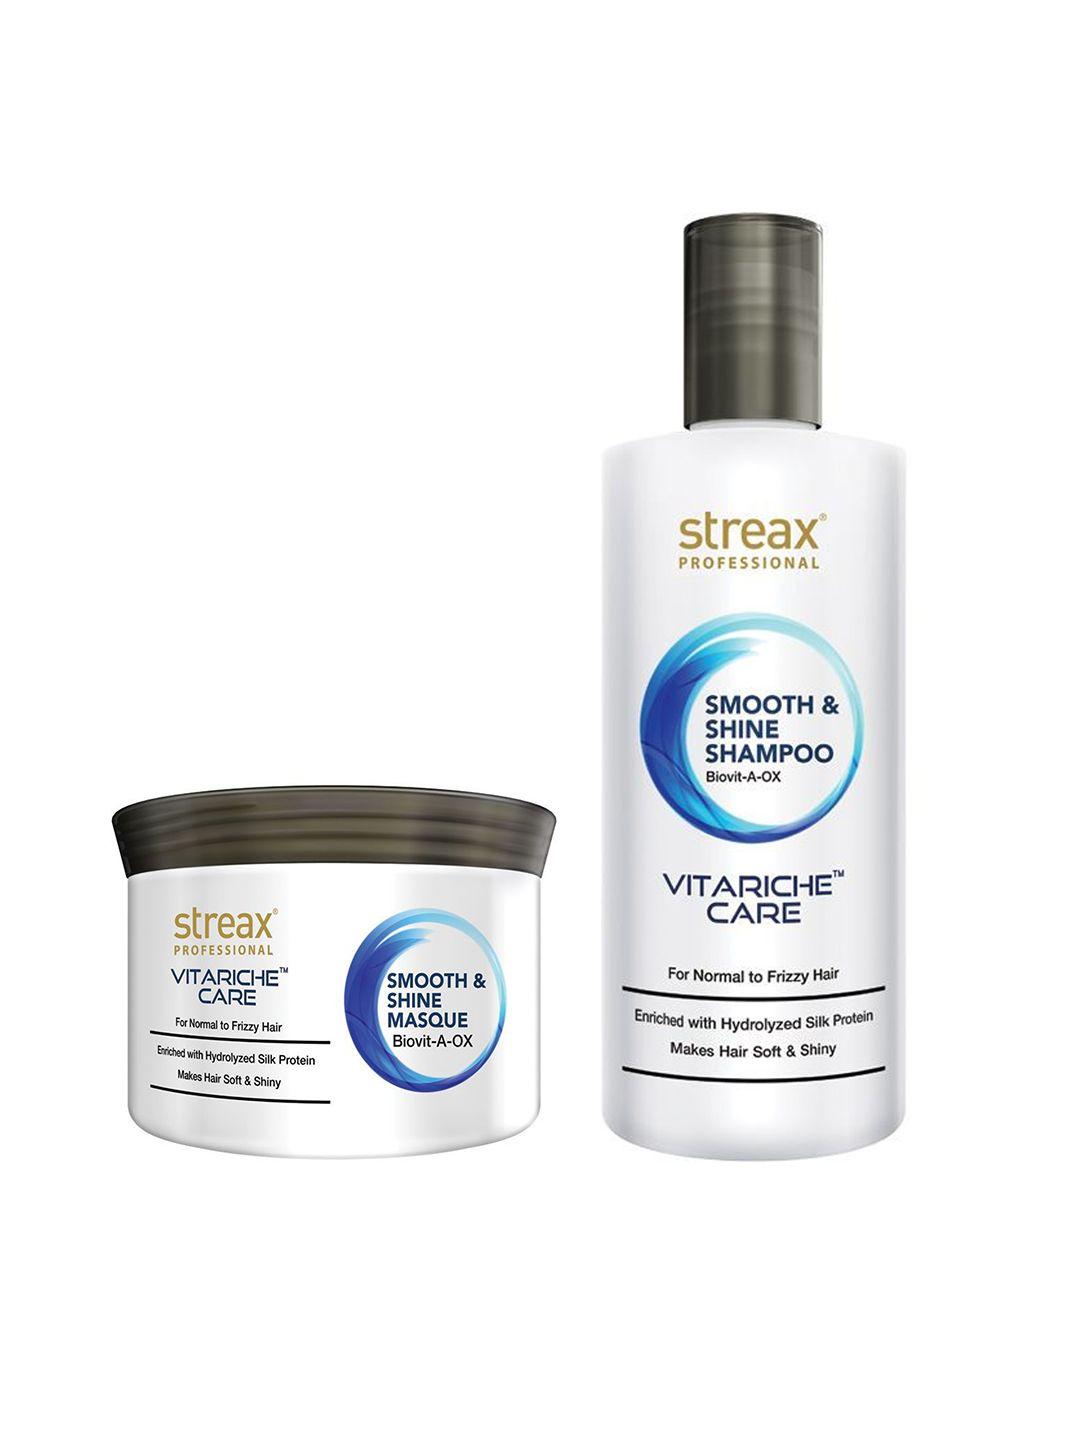 streax professional set of vitariche care smooth & shine shampoo & hair mask